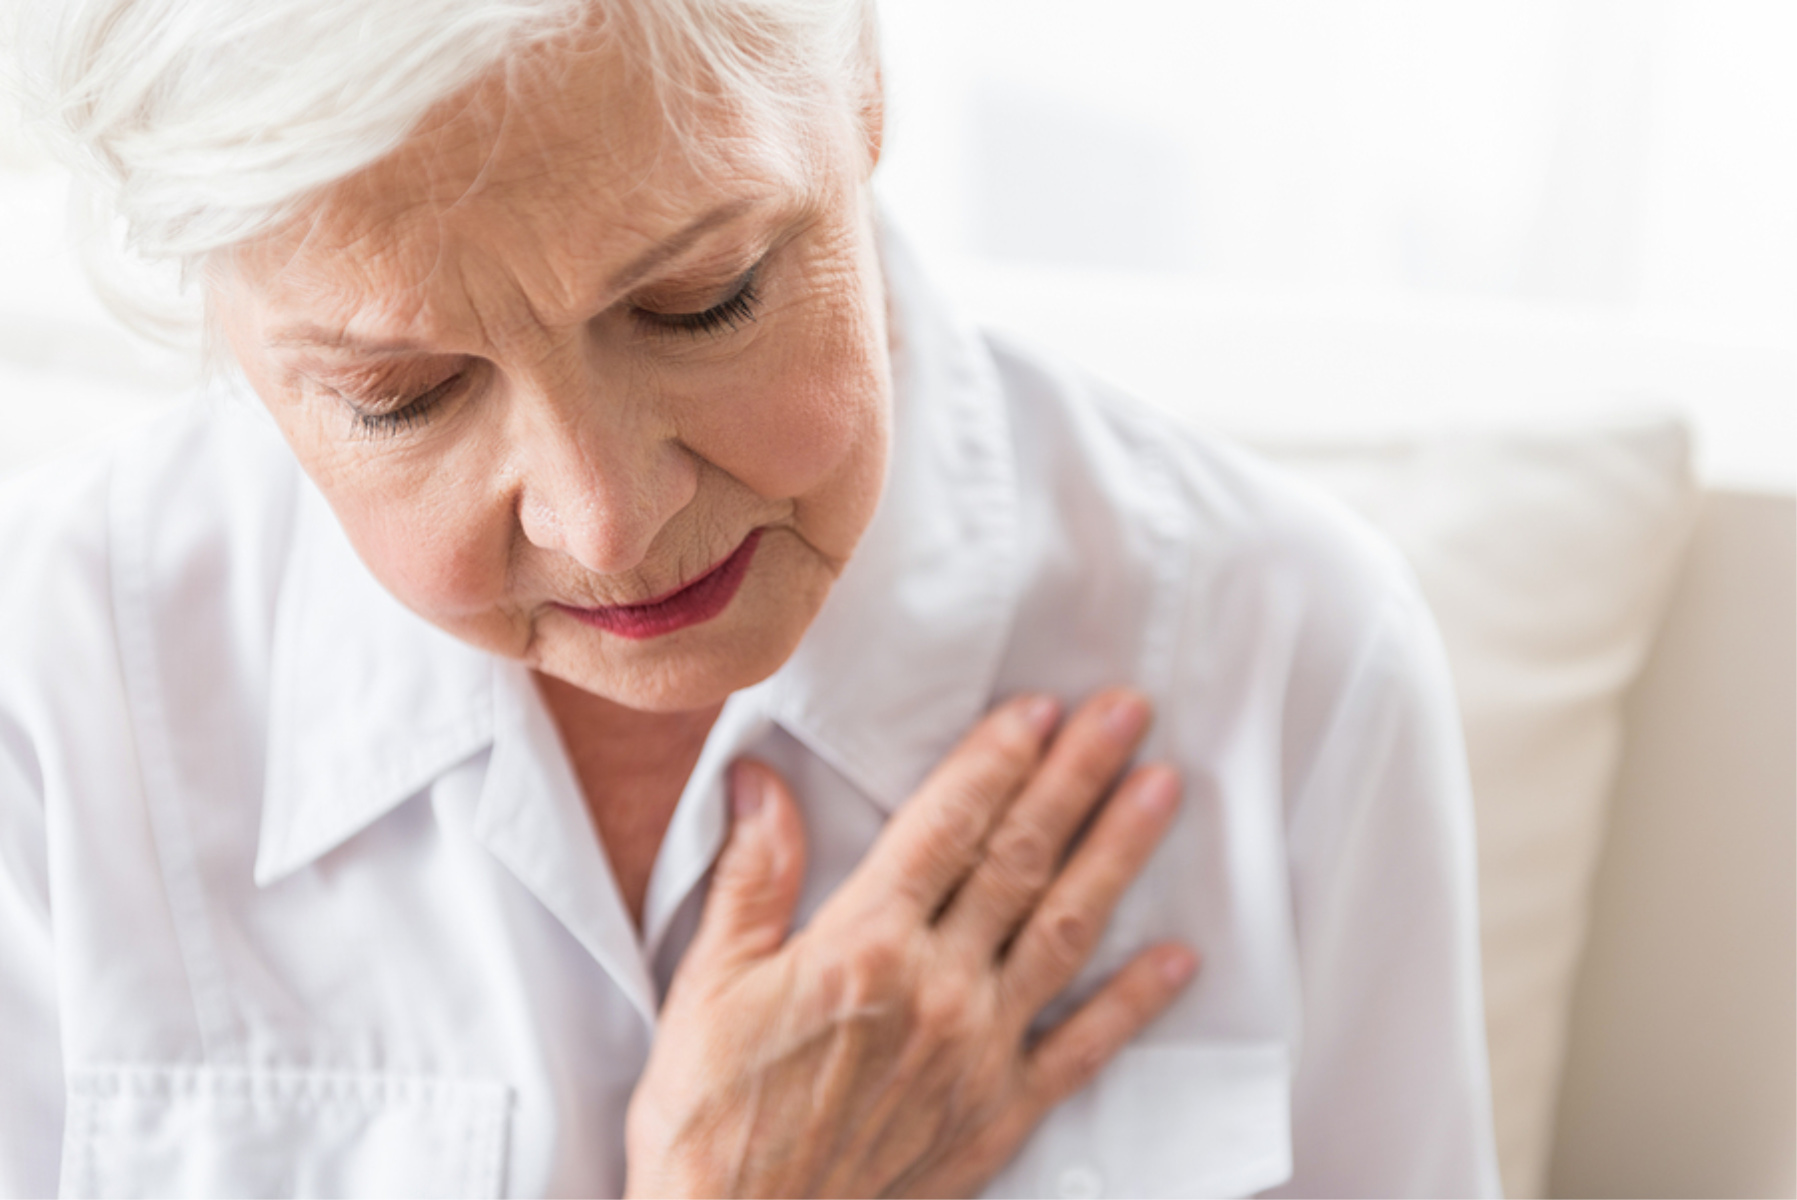 Ways to Reduce Heart Disease in Seniors